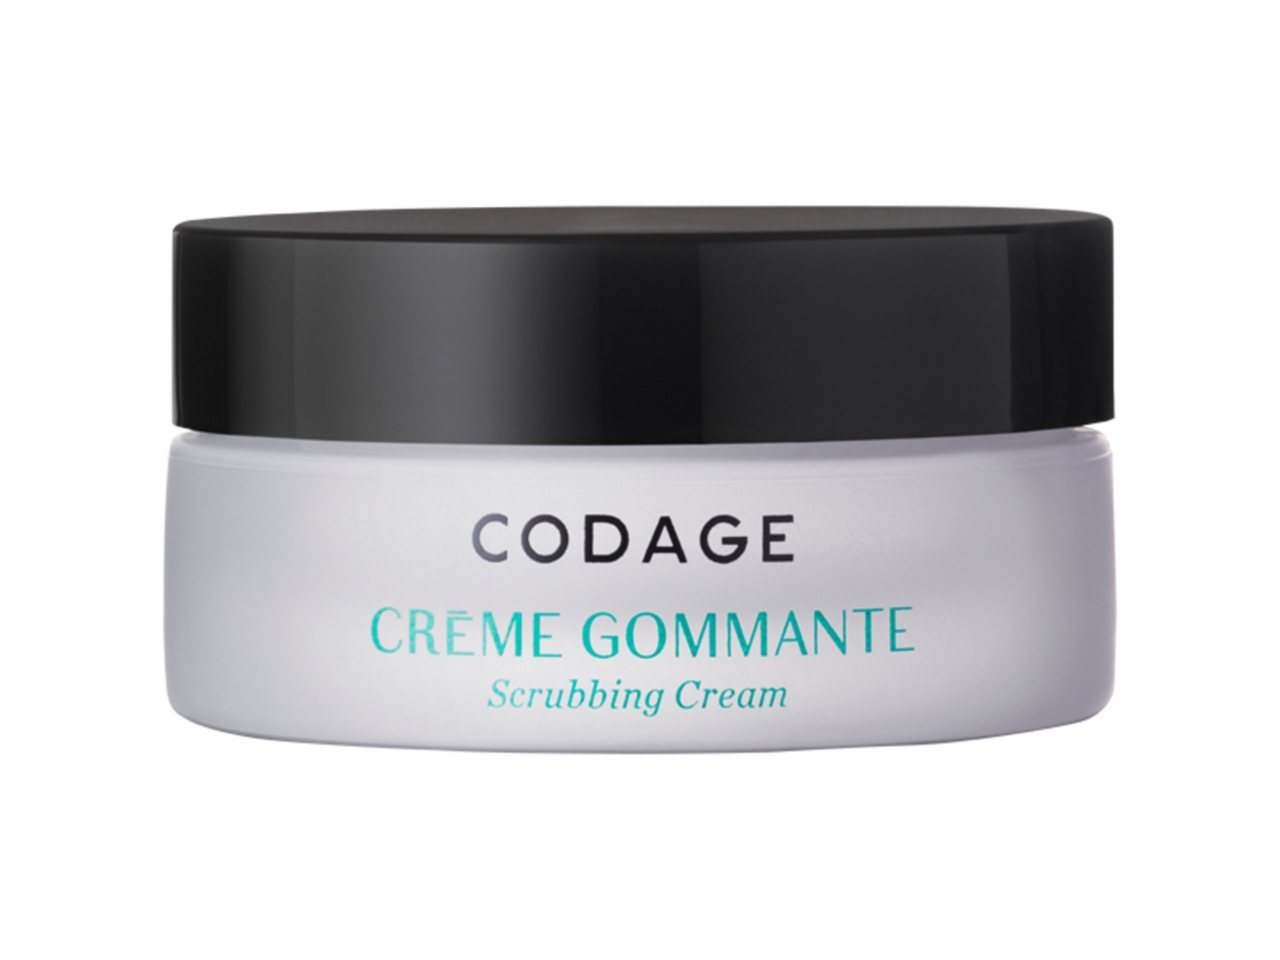 Codage Tagescreme Crème Gommante von Codage